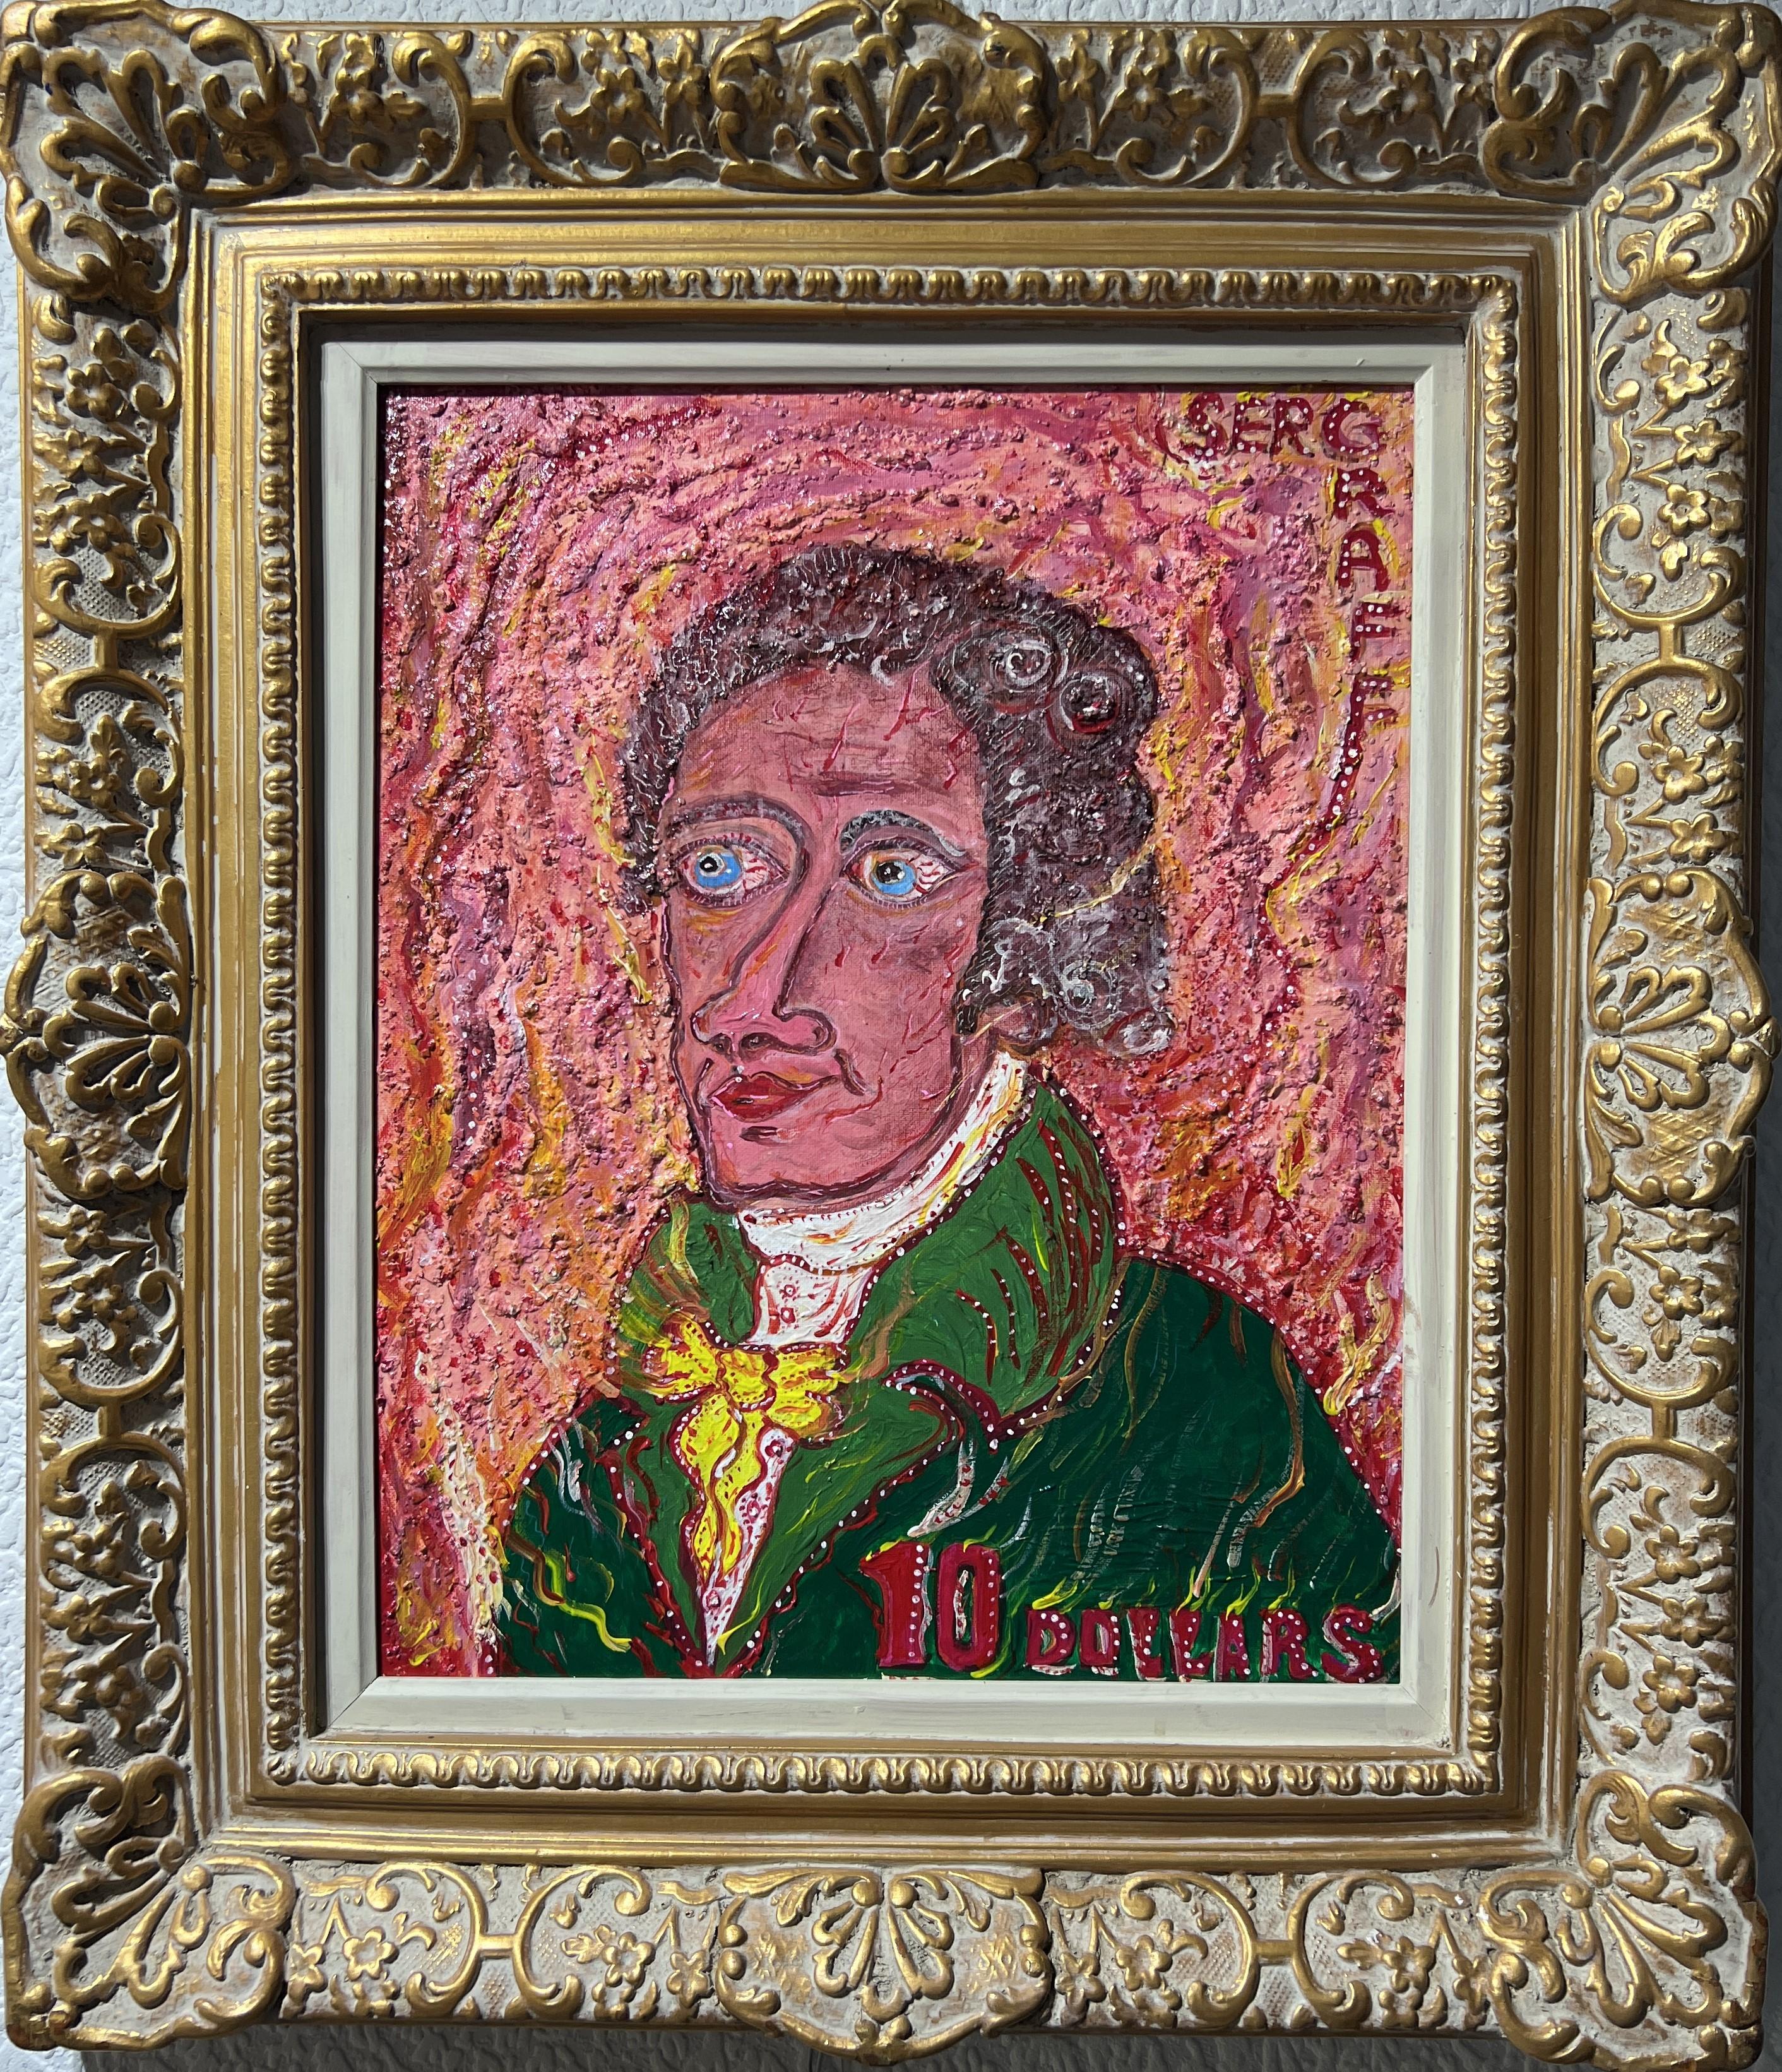 Serg Graff Portrait Painting - Original painting on canvas, portrait of Alexander Hamilton signed S. Graff, COA